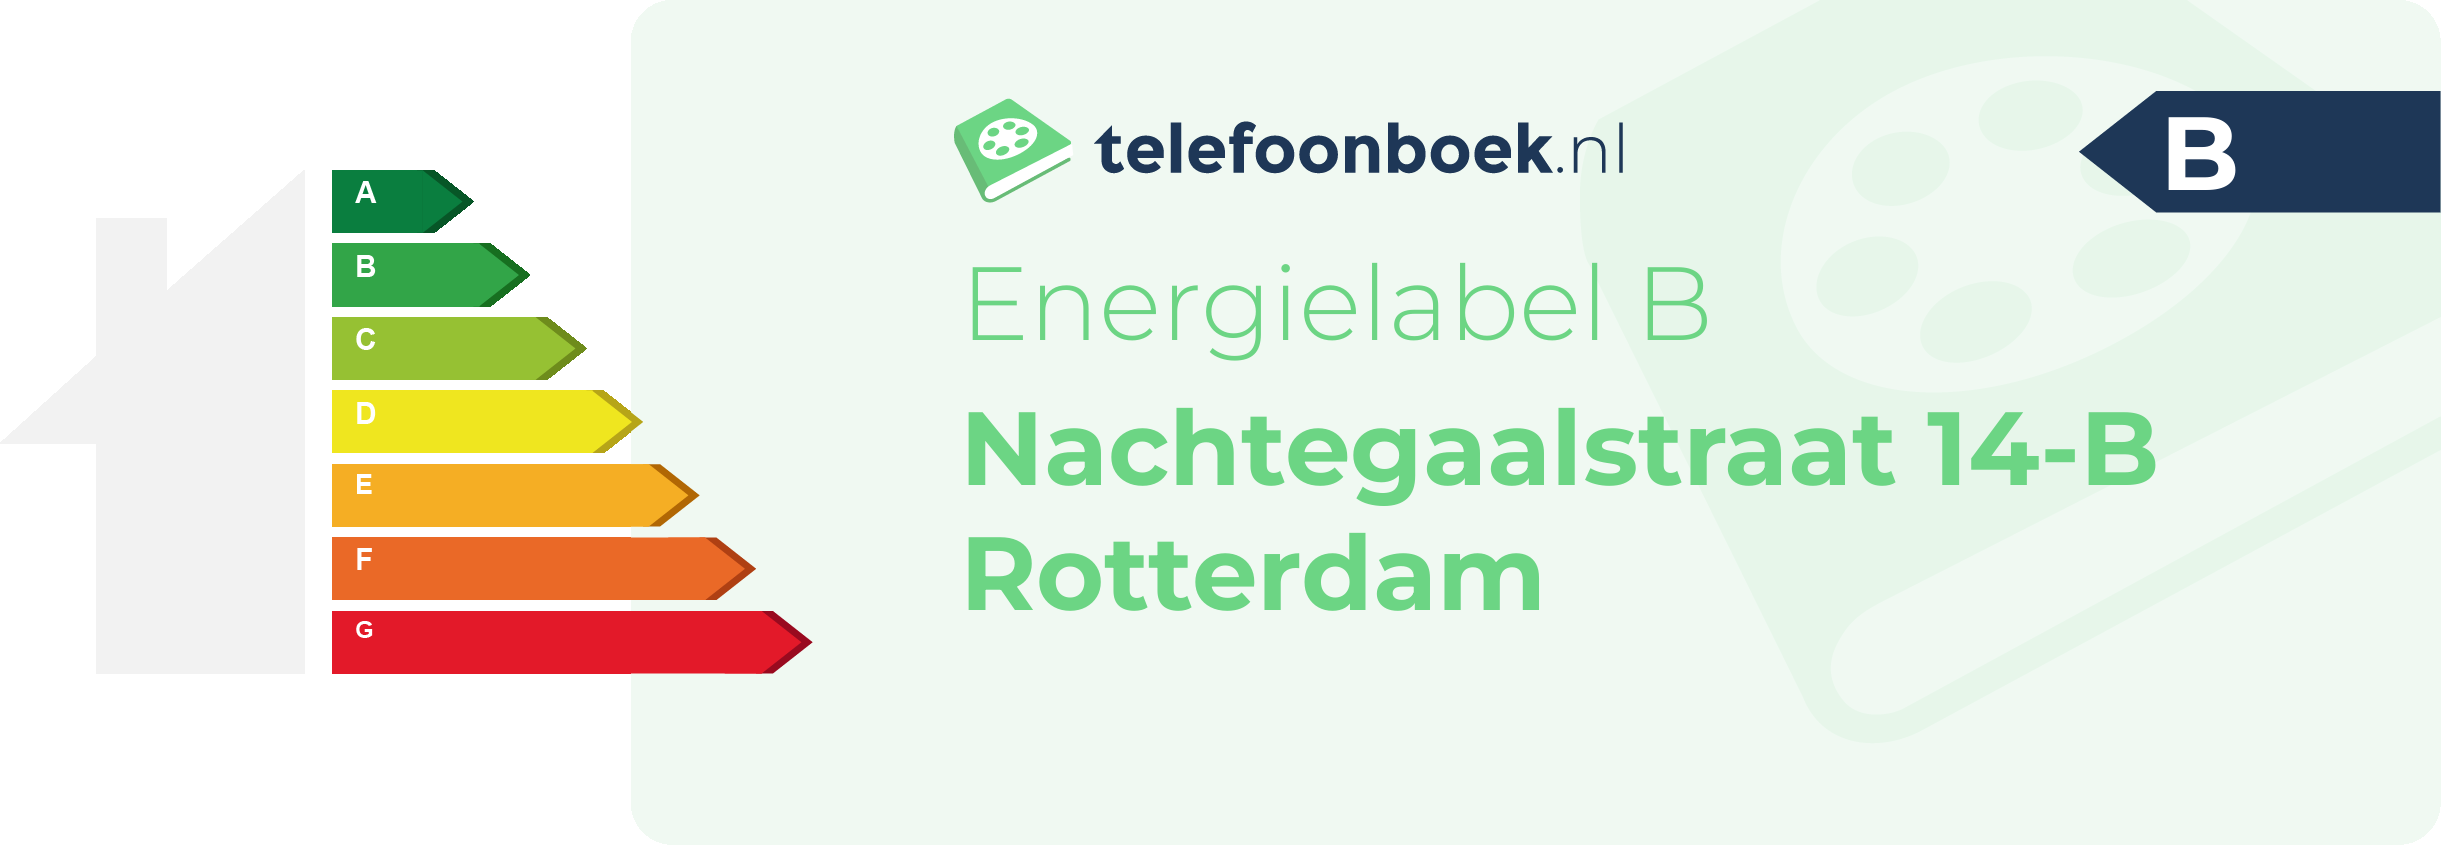 Energielabel Nachtegaalstraat 14-B Rotterdam